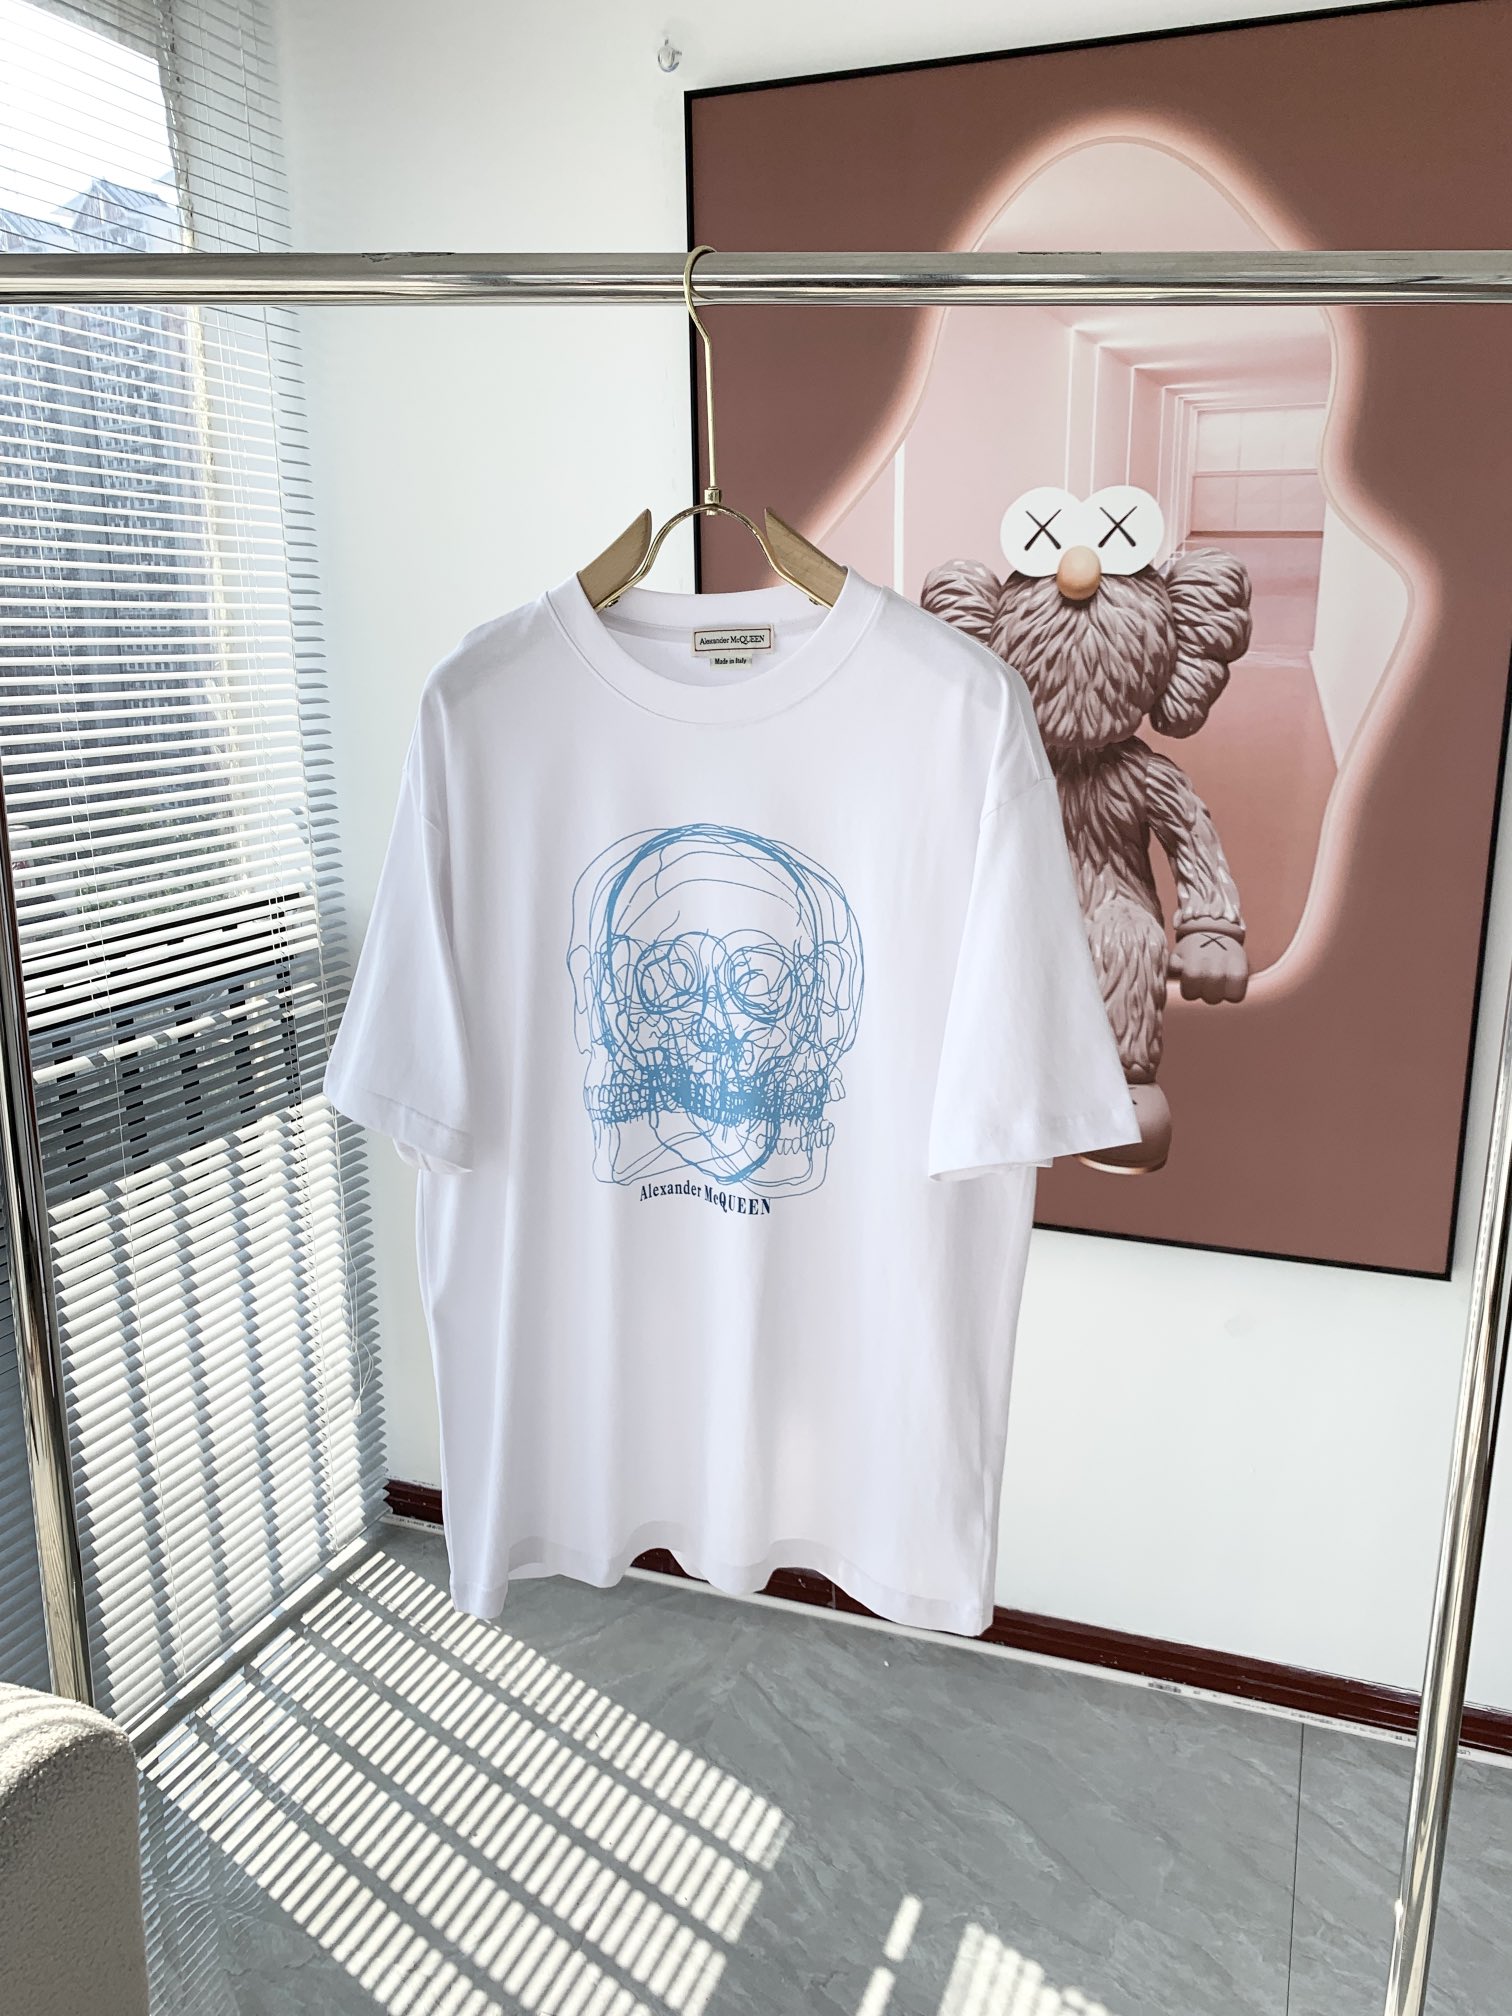 Alexander McQueen Good
 Clothing T-Shirt Unisex Cotton Spring/Summer Collection Short Sleeve